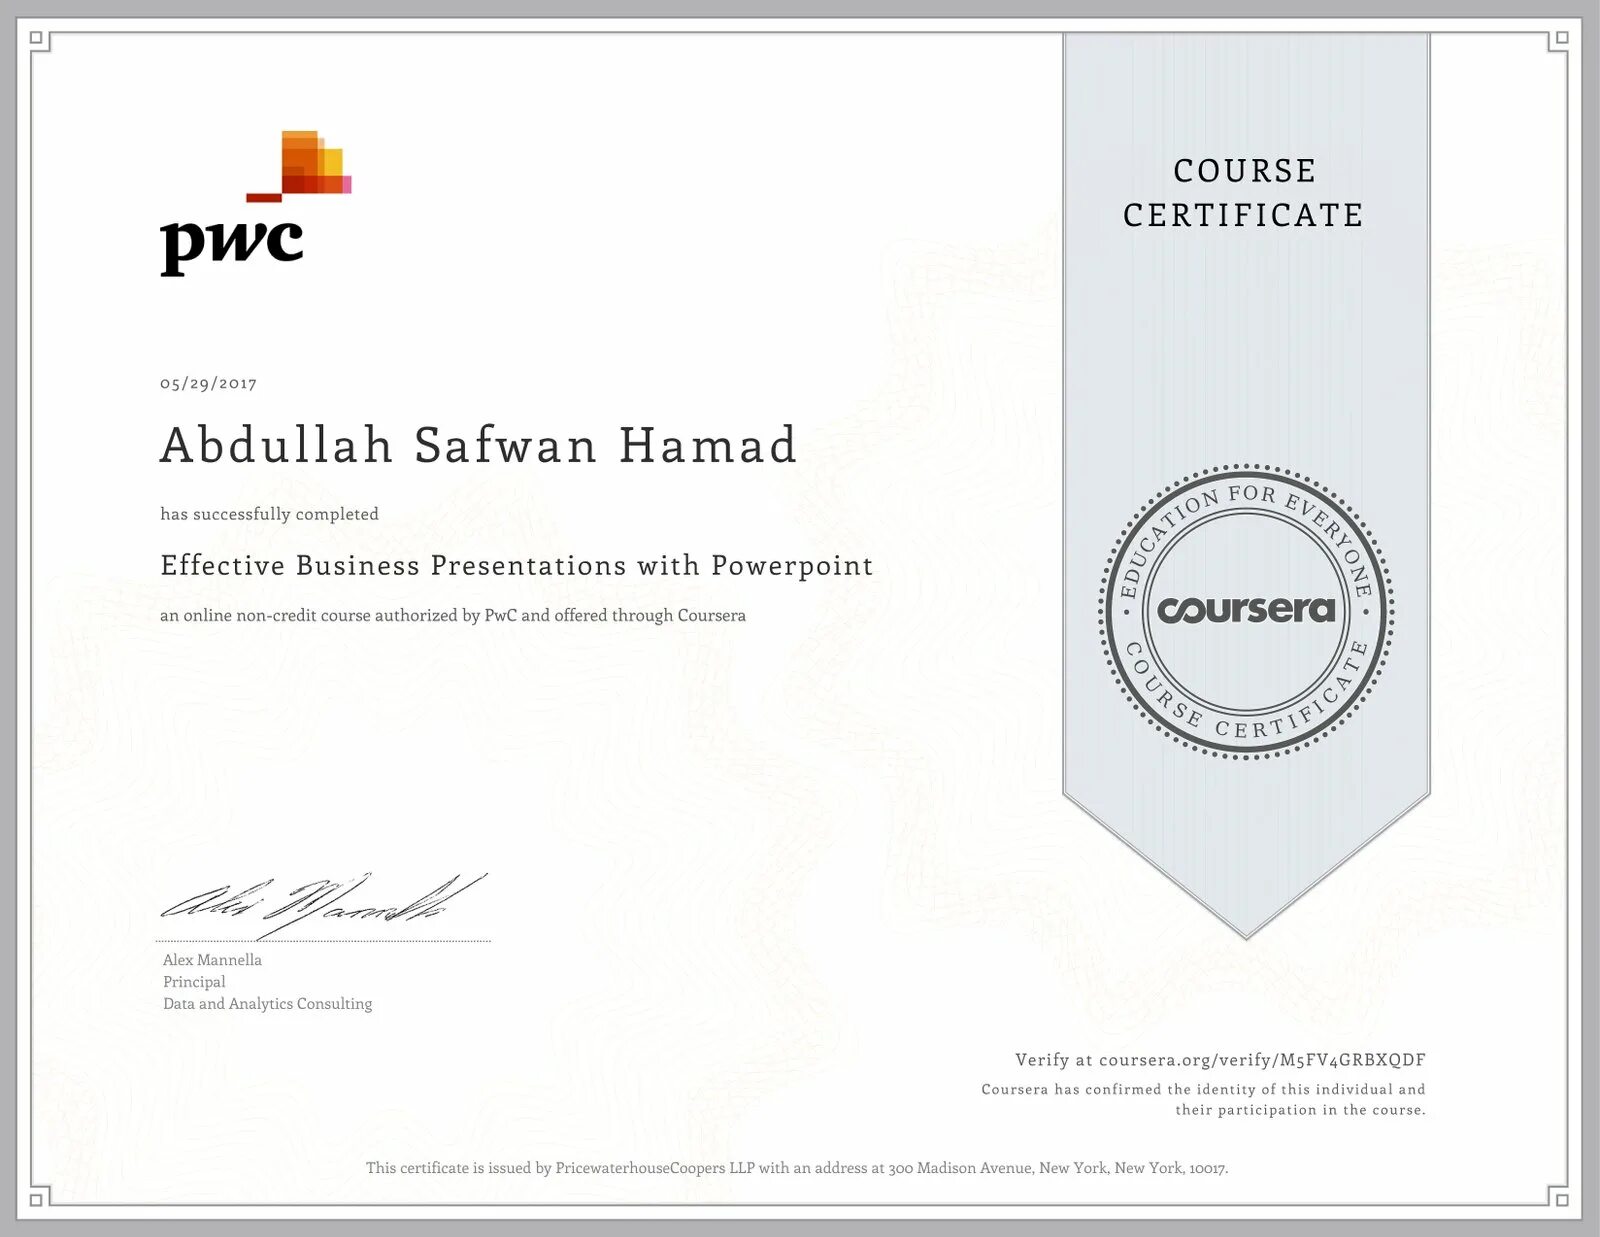 Make certificate. Сертификат Coursera. Как выглядит сертификат Coursera. PWC сертификат.